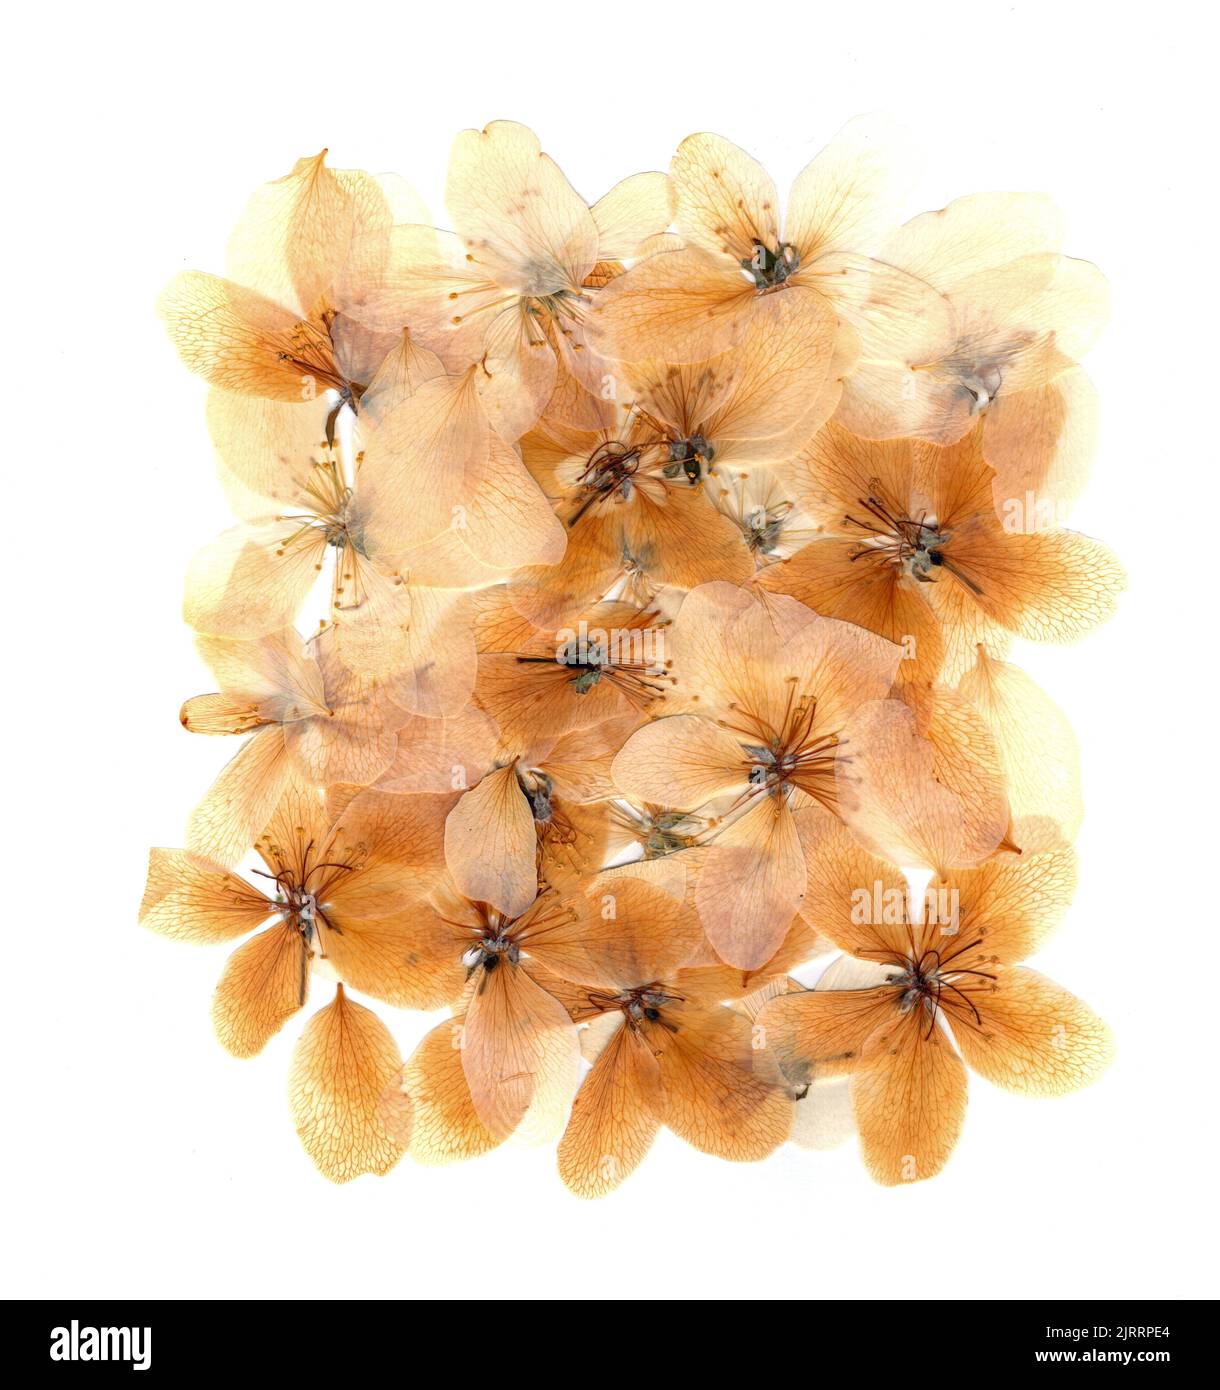 Transparente getrocknete gepresste Blüten und Blütenblätter hellorange Farbe des Blütenapfels Stockfoto